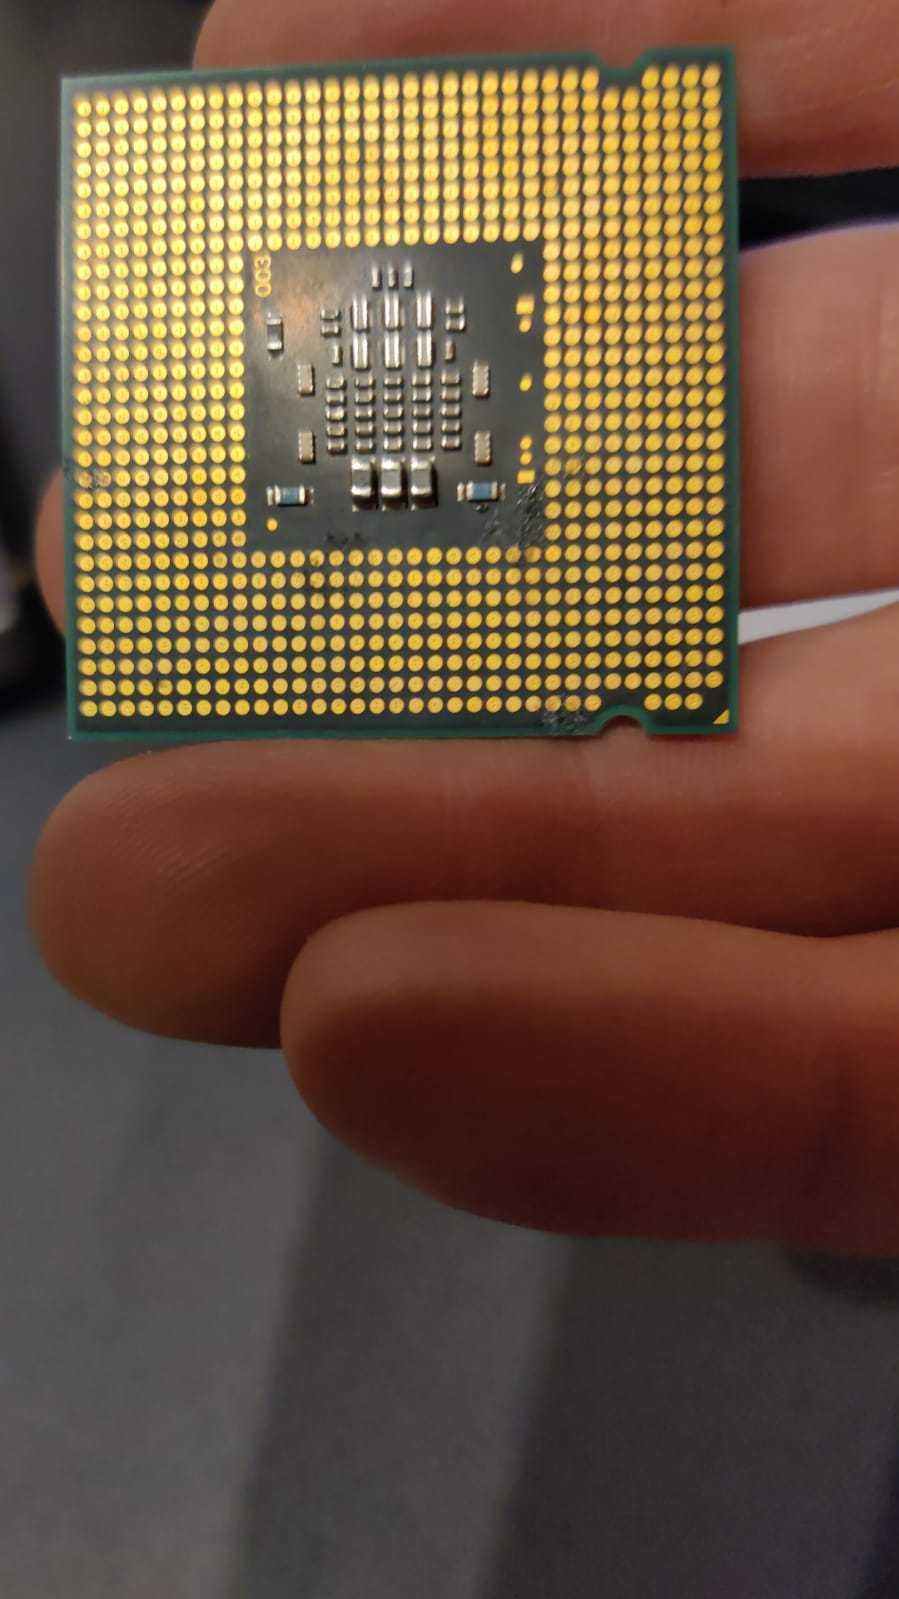 Vand procesor Intel Pentium  Dual- Core 2,2 GHz